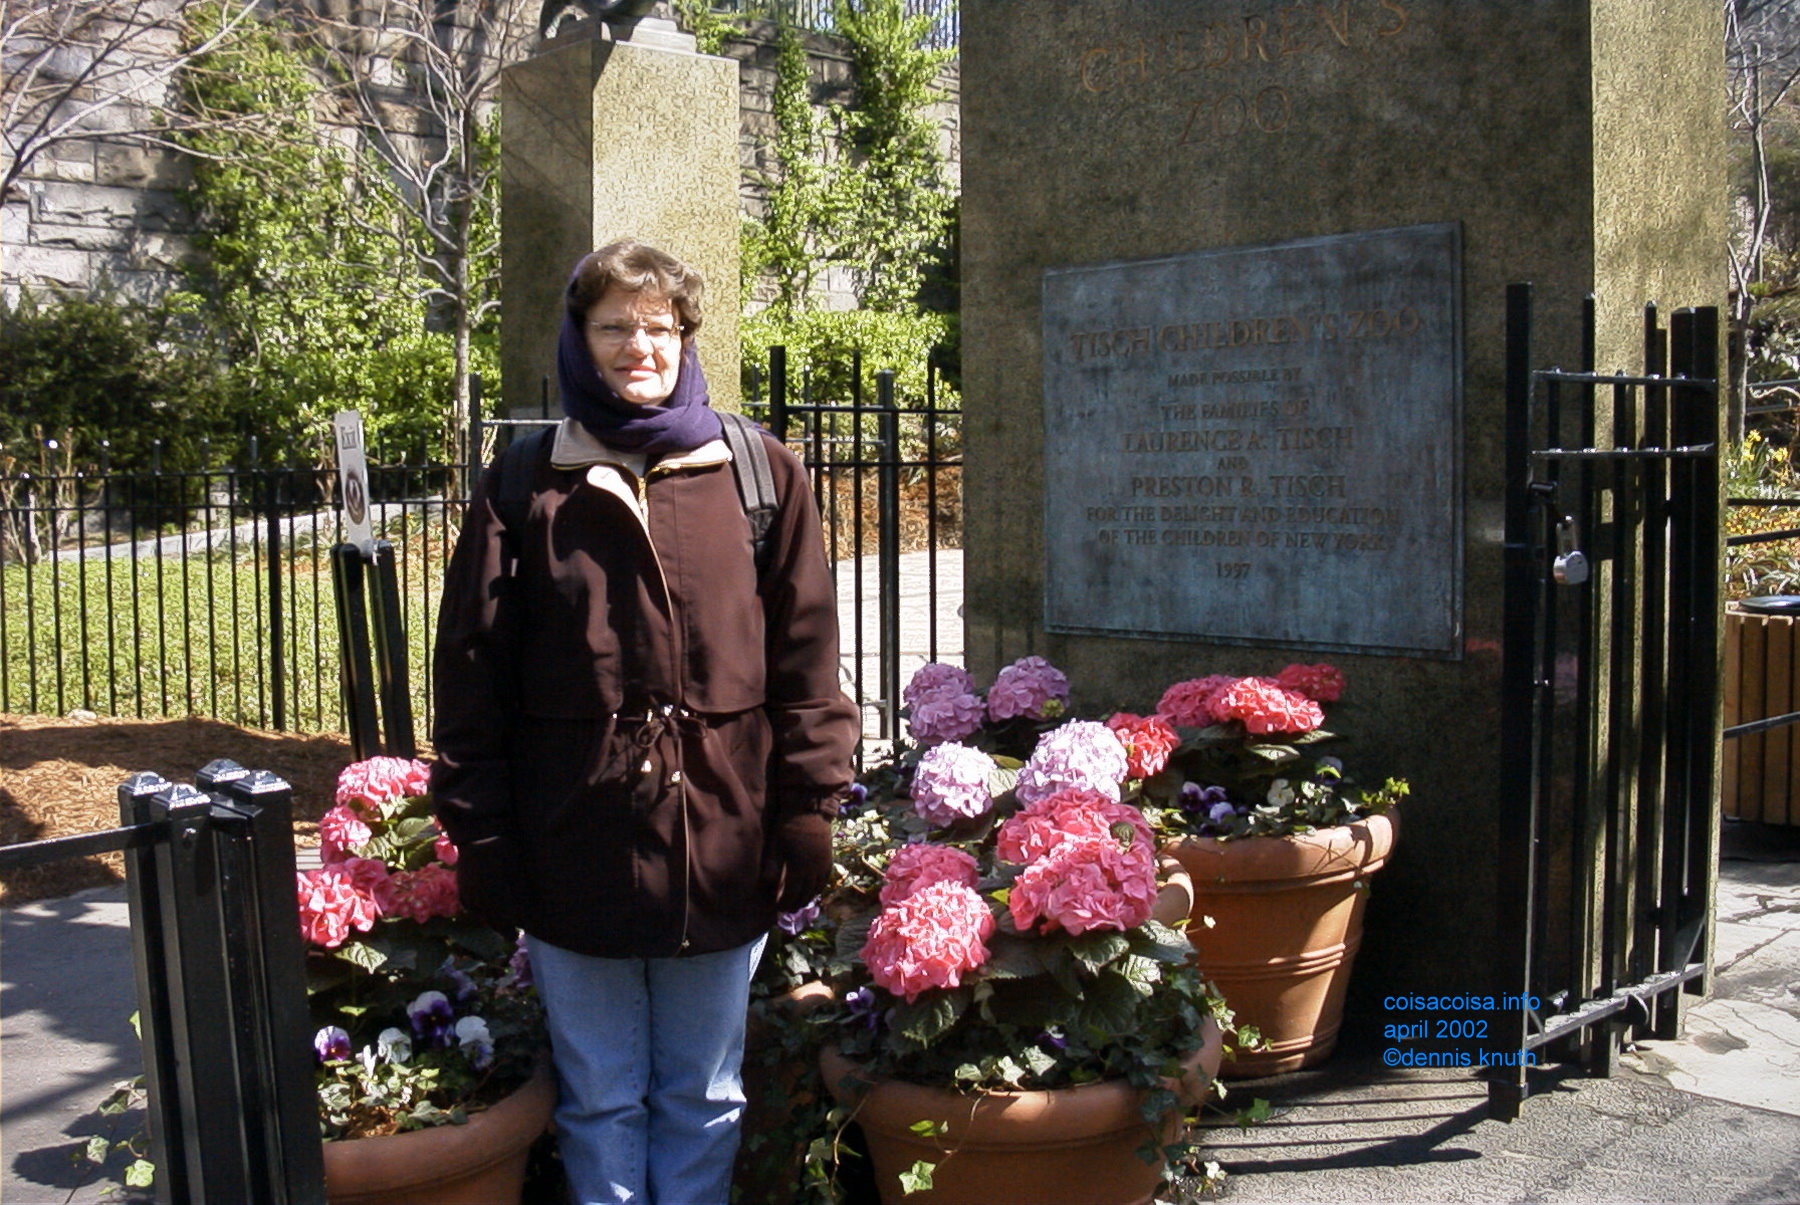 Sherri with Hydrangeas in the Park